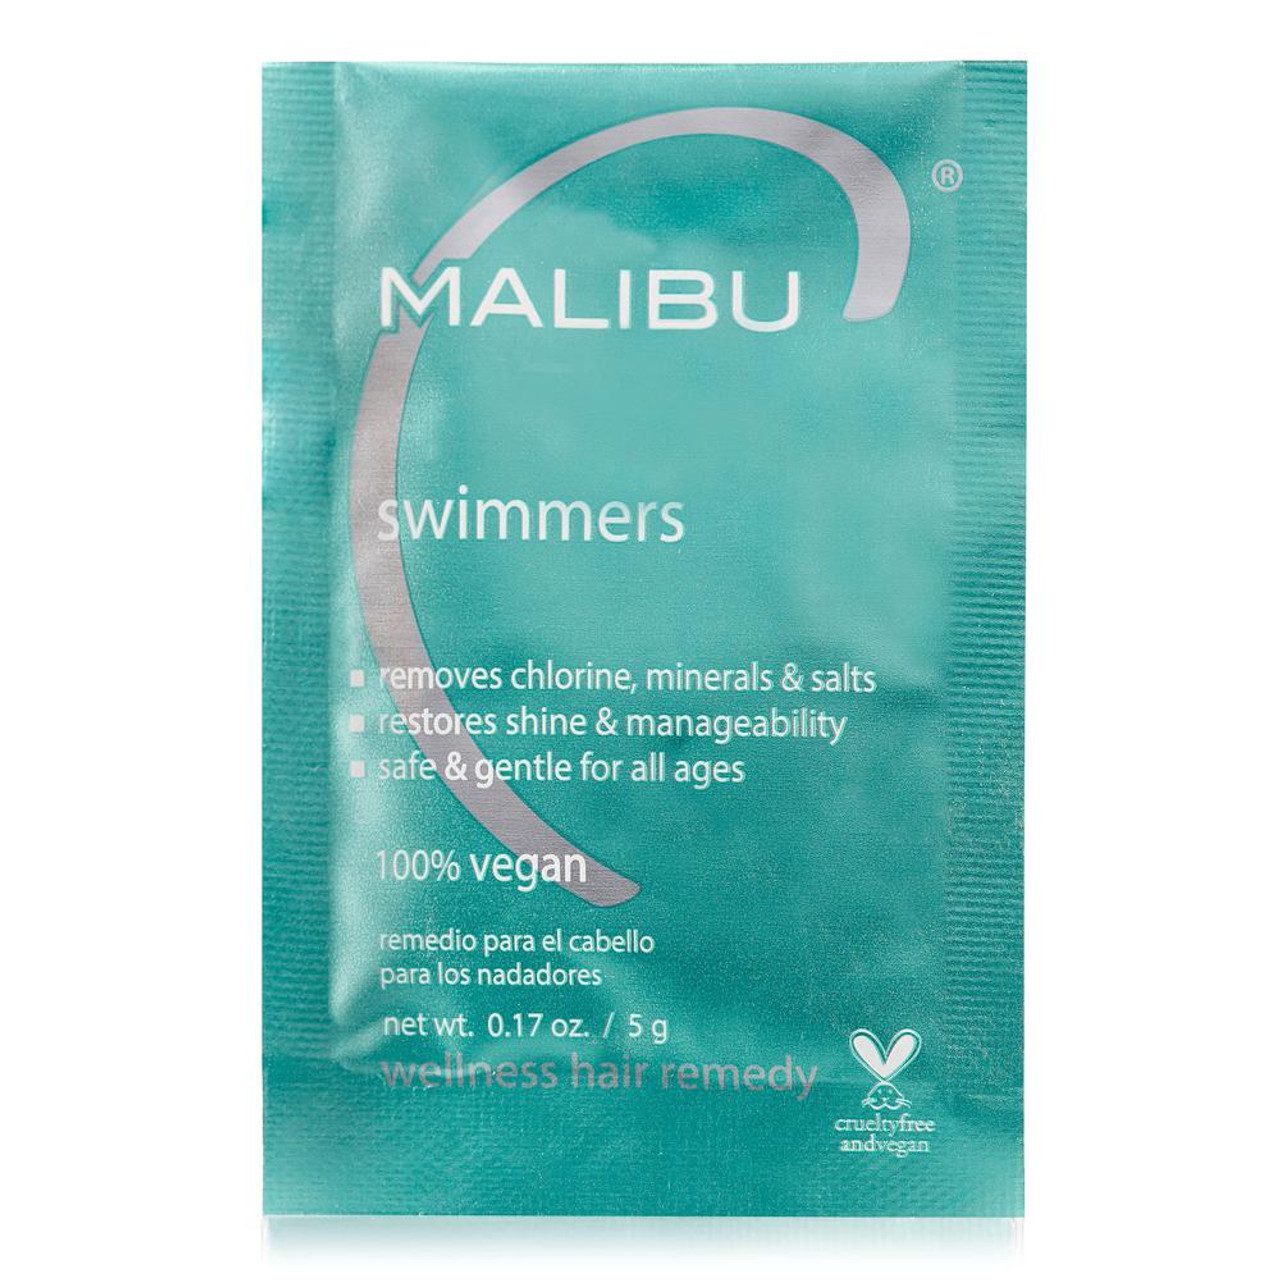 5910---Swimmerss-Wellnes-Remedy-_Packet_-by-Malibu-C_1000x__18103